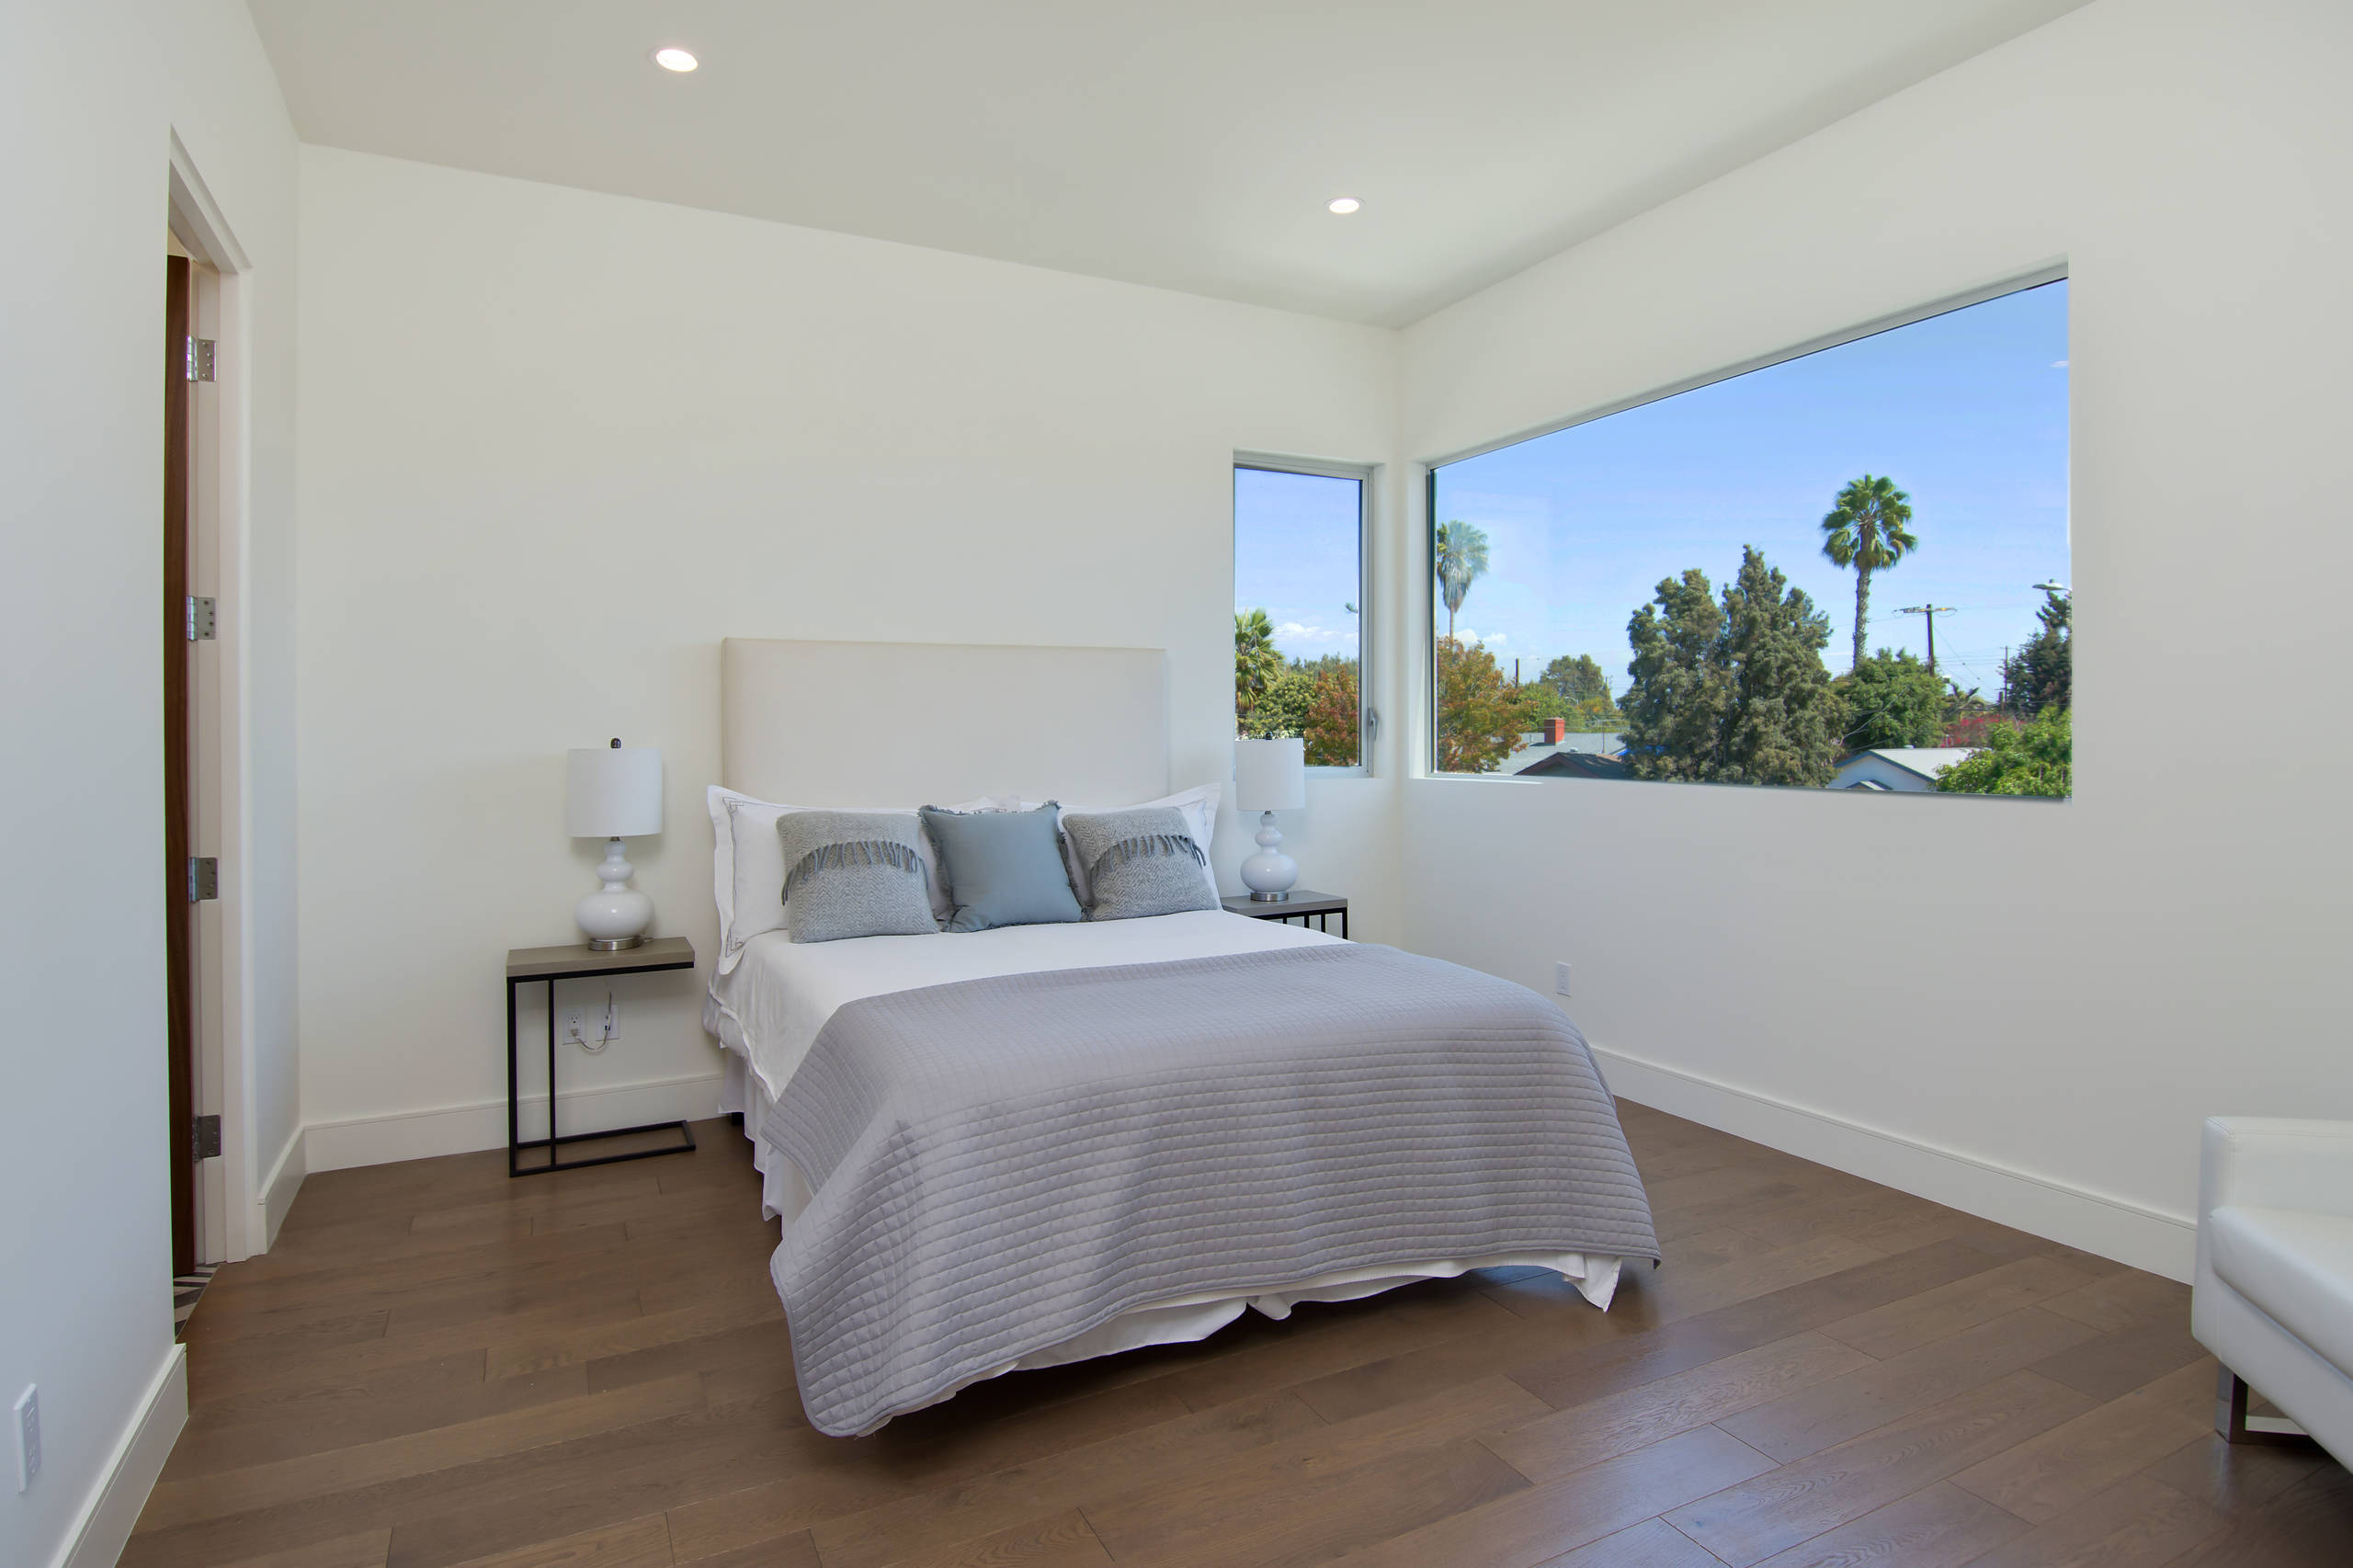 Bedroom | Hallmark Moderno, Mohegan Oak, Venice, CA - Michelle Anaya